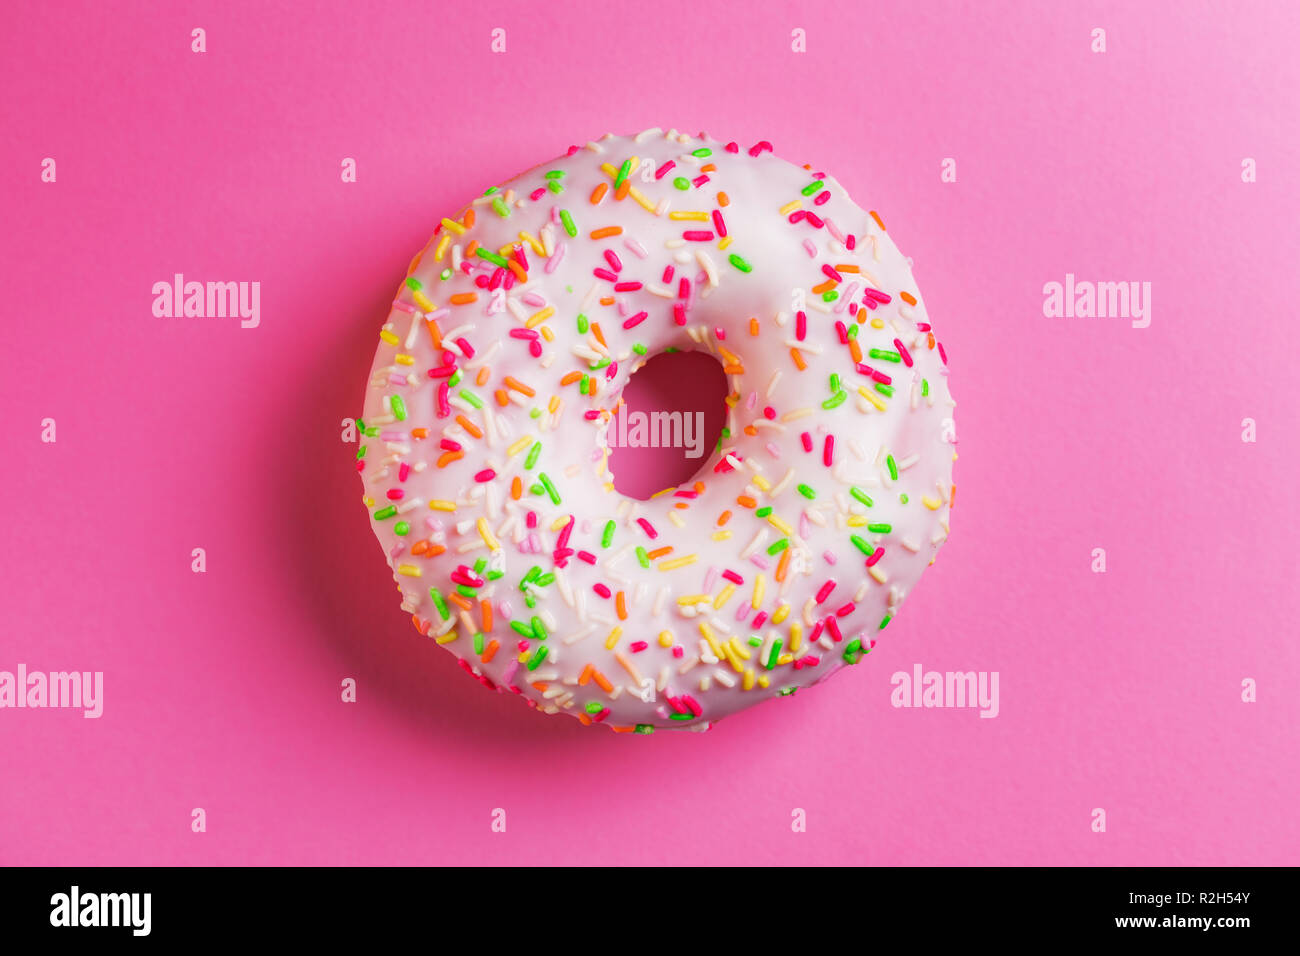 Single round donut on pink background. Stock Photo